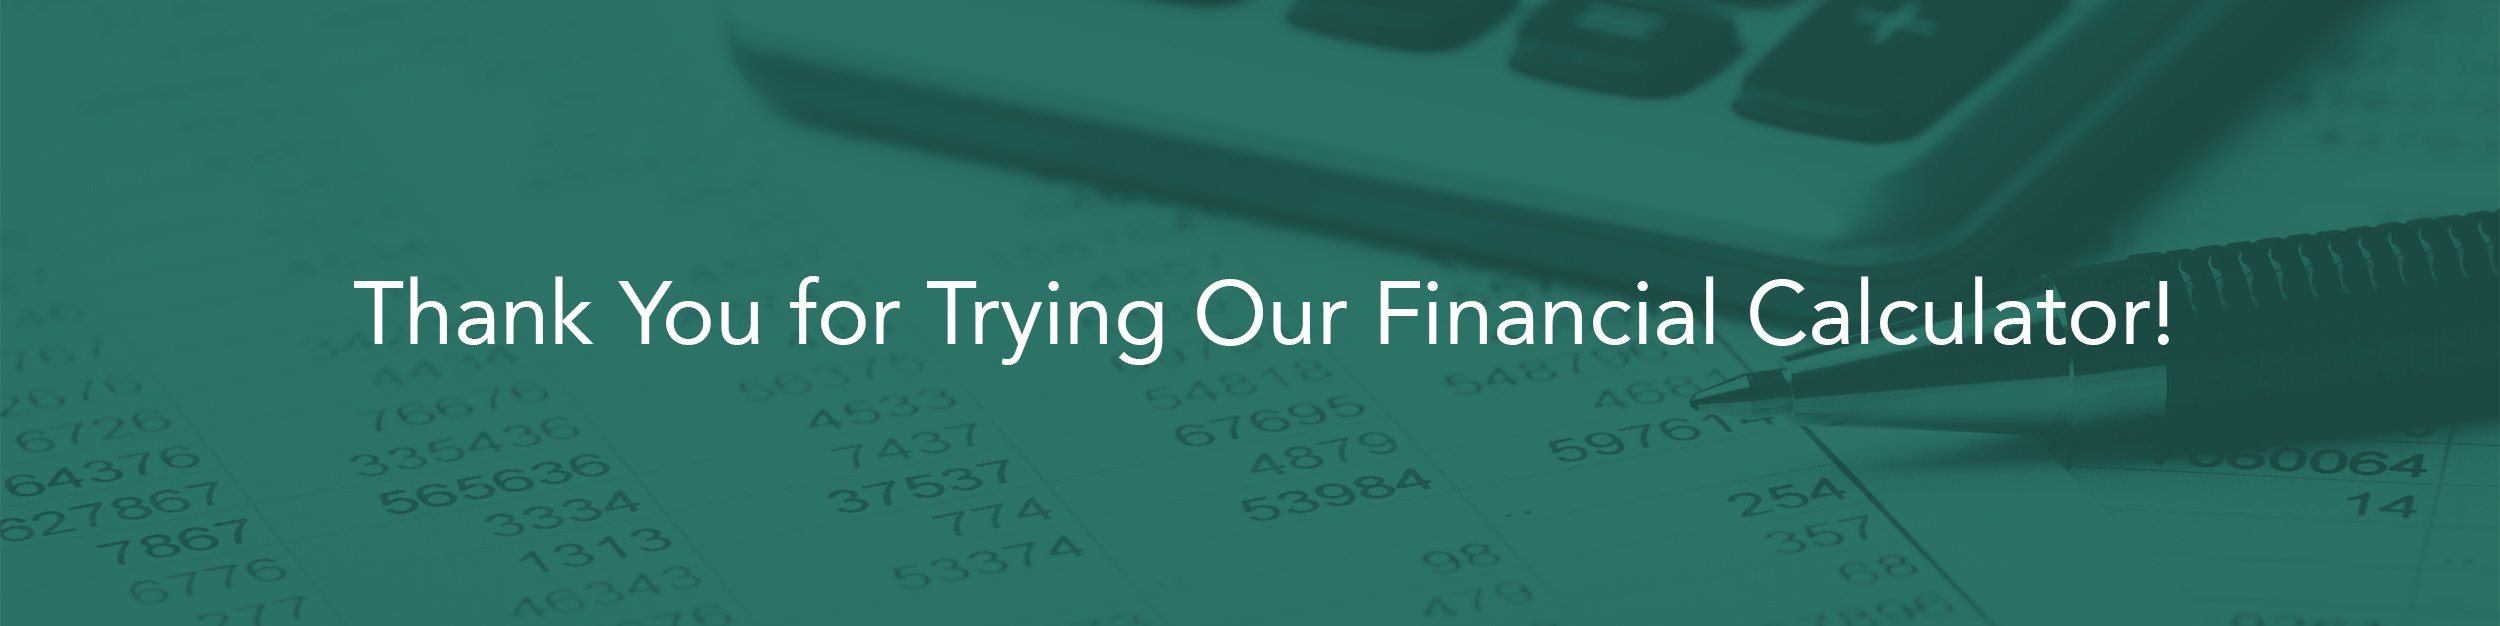 ty-financial-calculator1